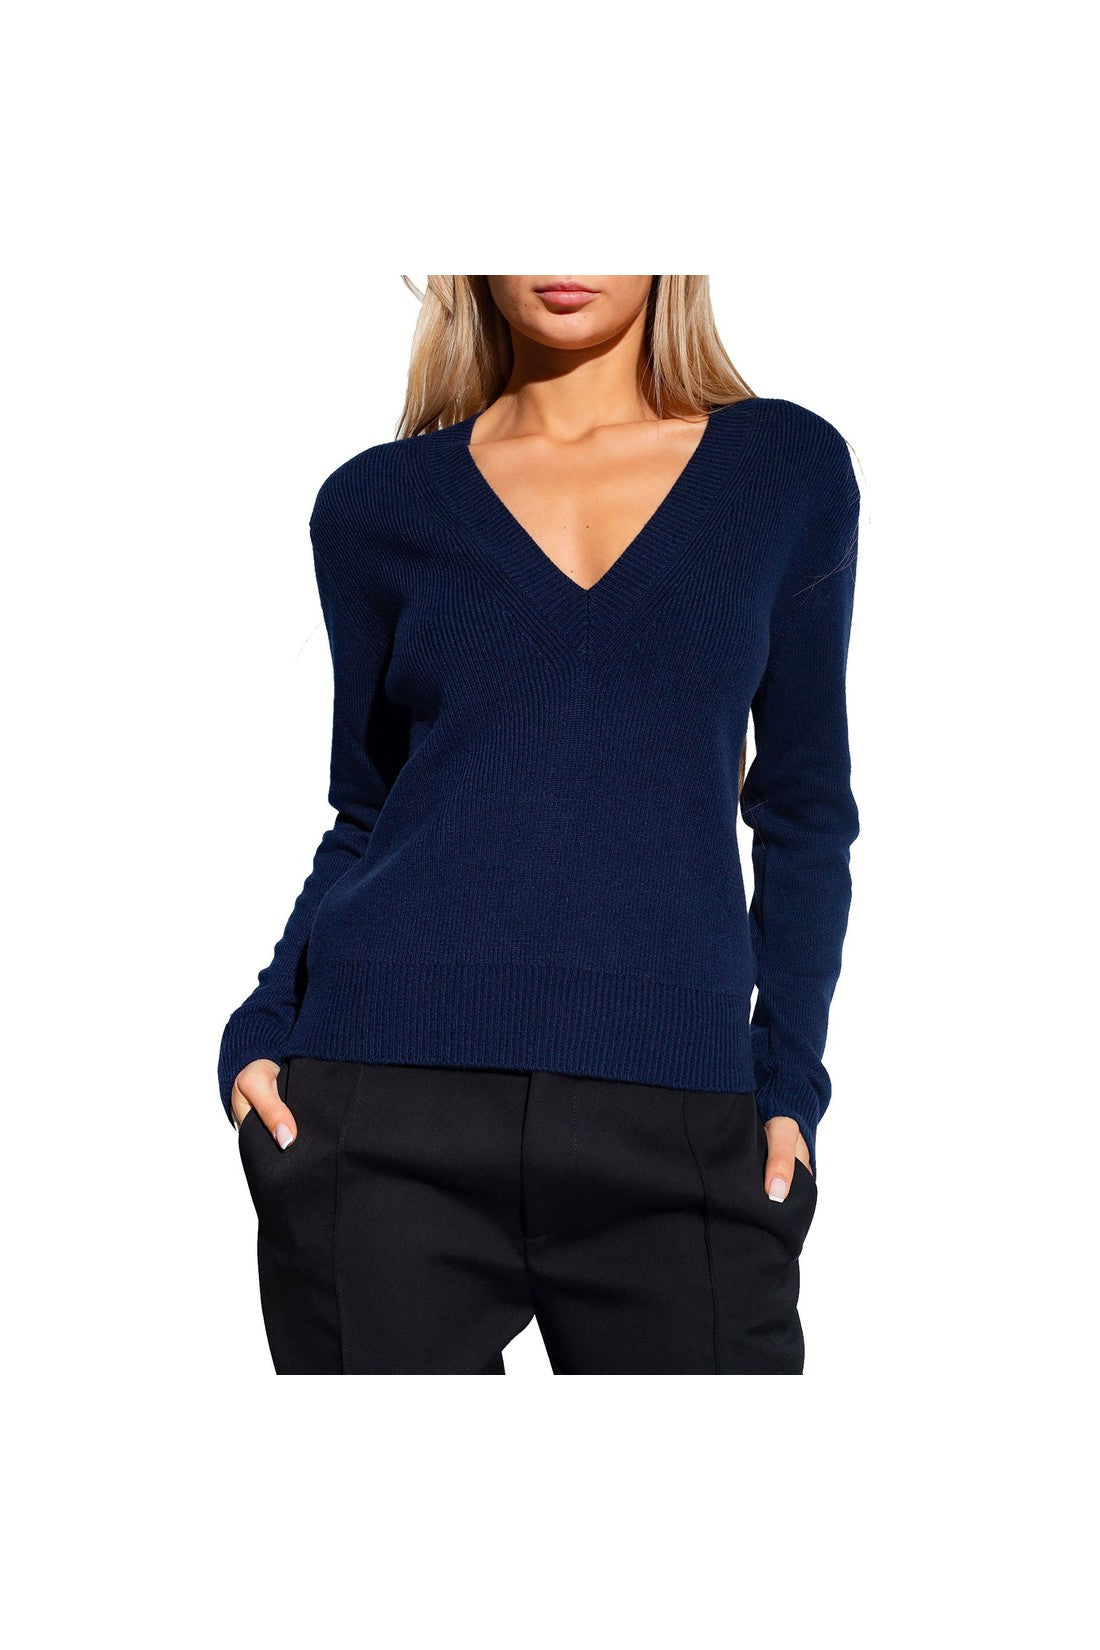 BOTTEGA VENETA-Bottega Veneta Cashmere Sweater-WOMEN CLOTHING-Outlet-Sale